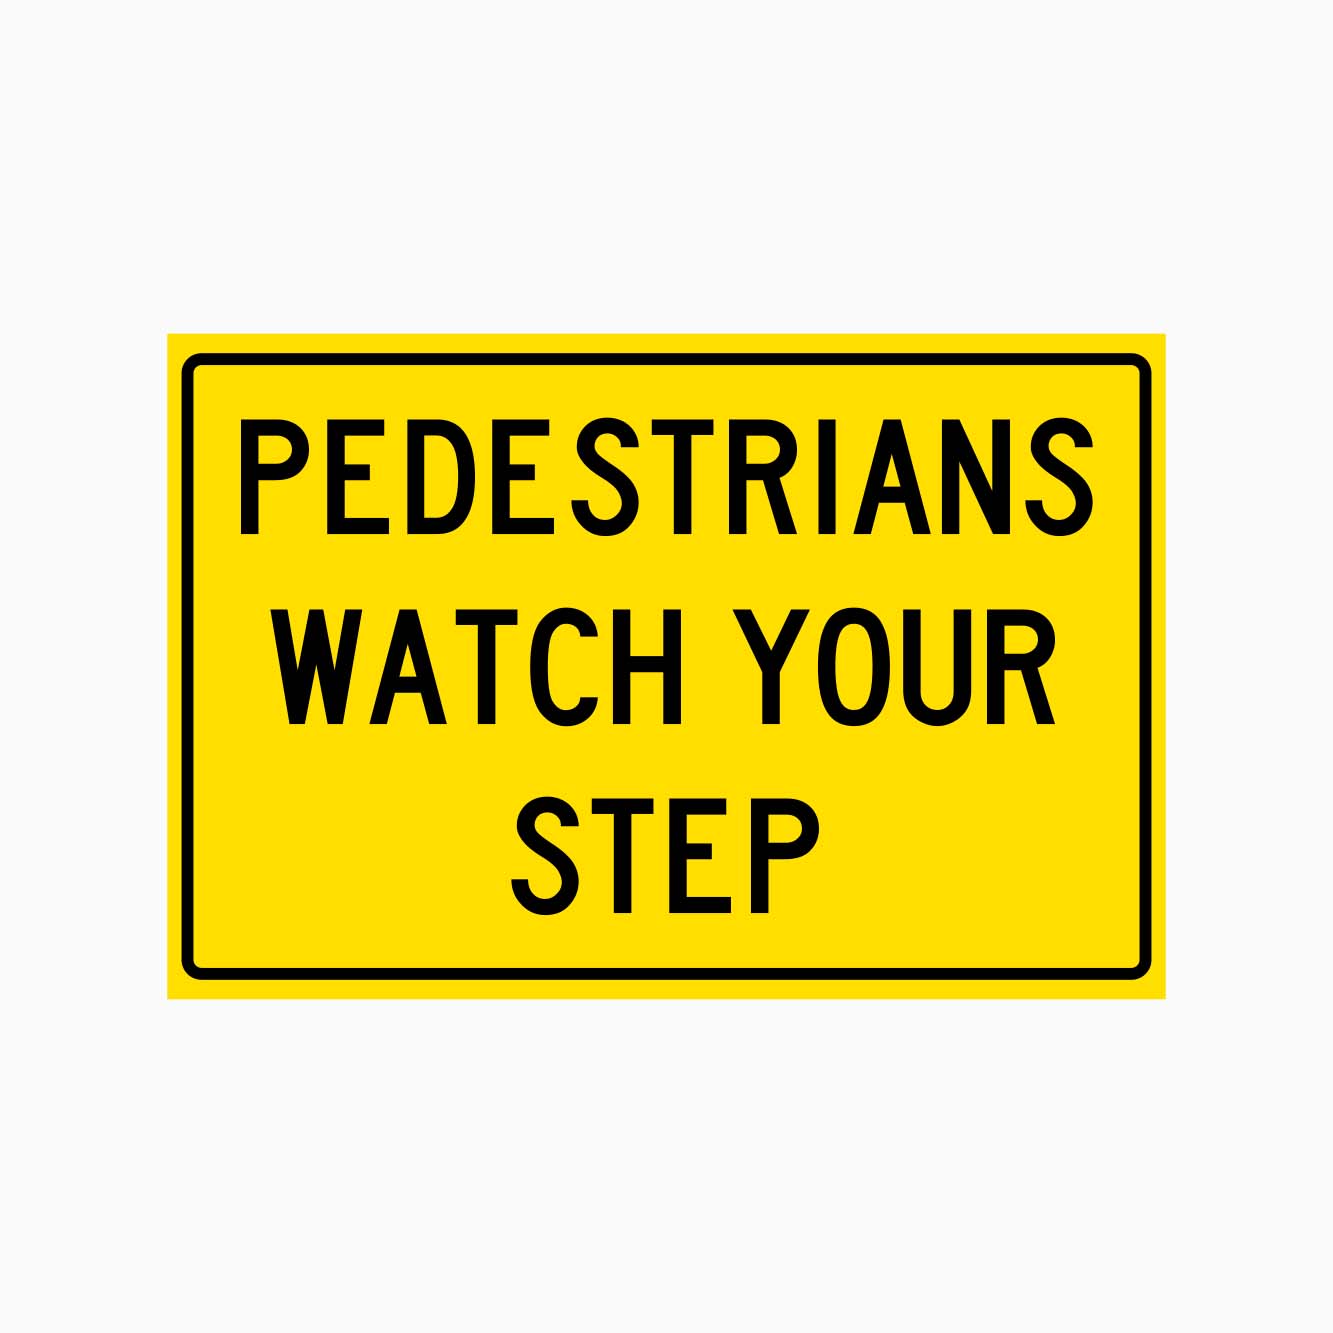 PEDESTRIANS WATCH YOUR STEP SIGN